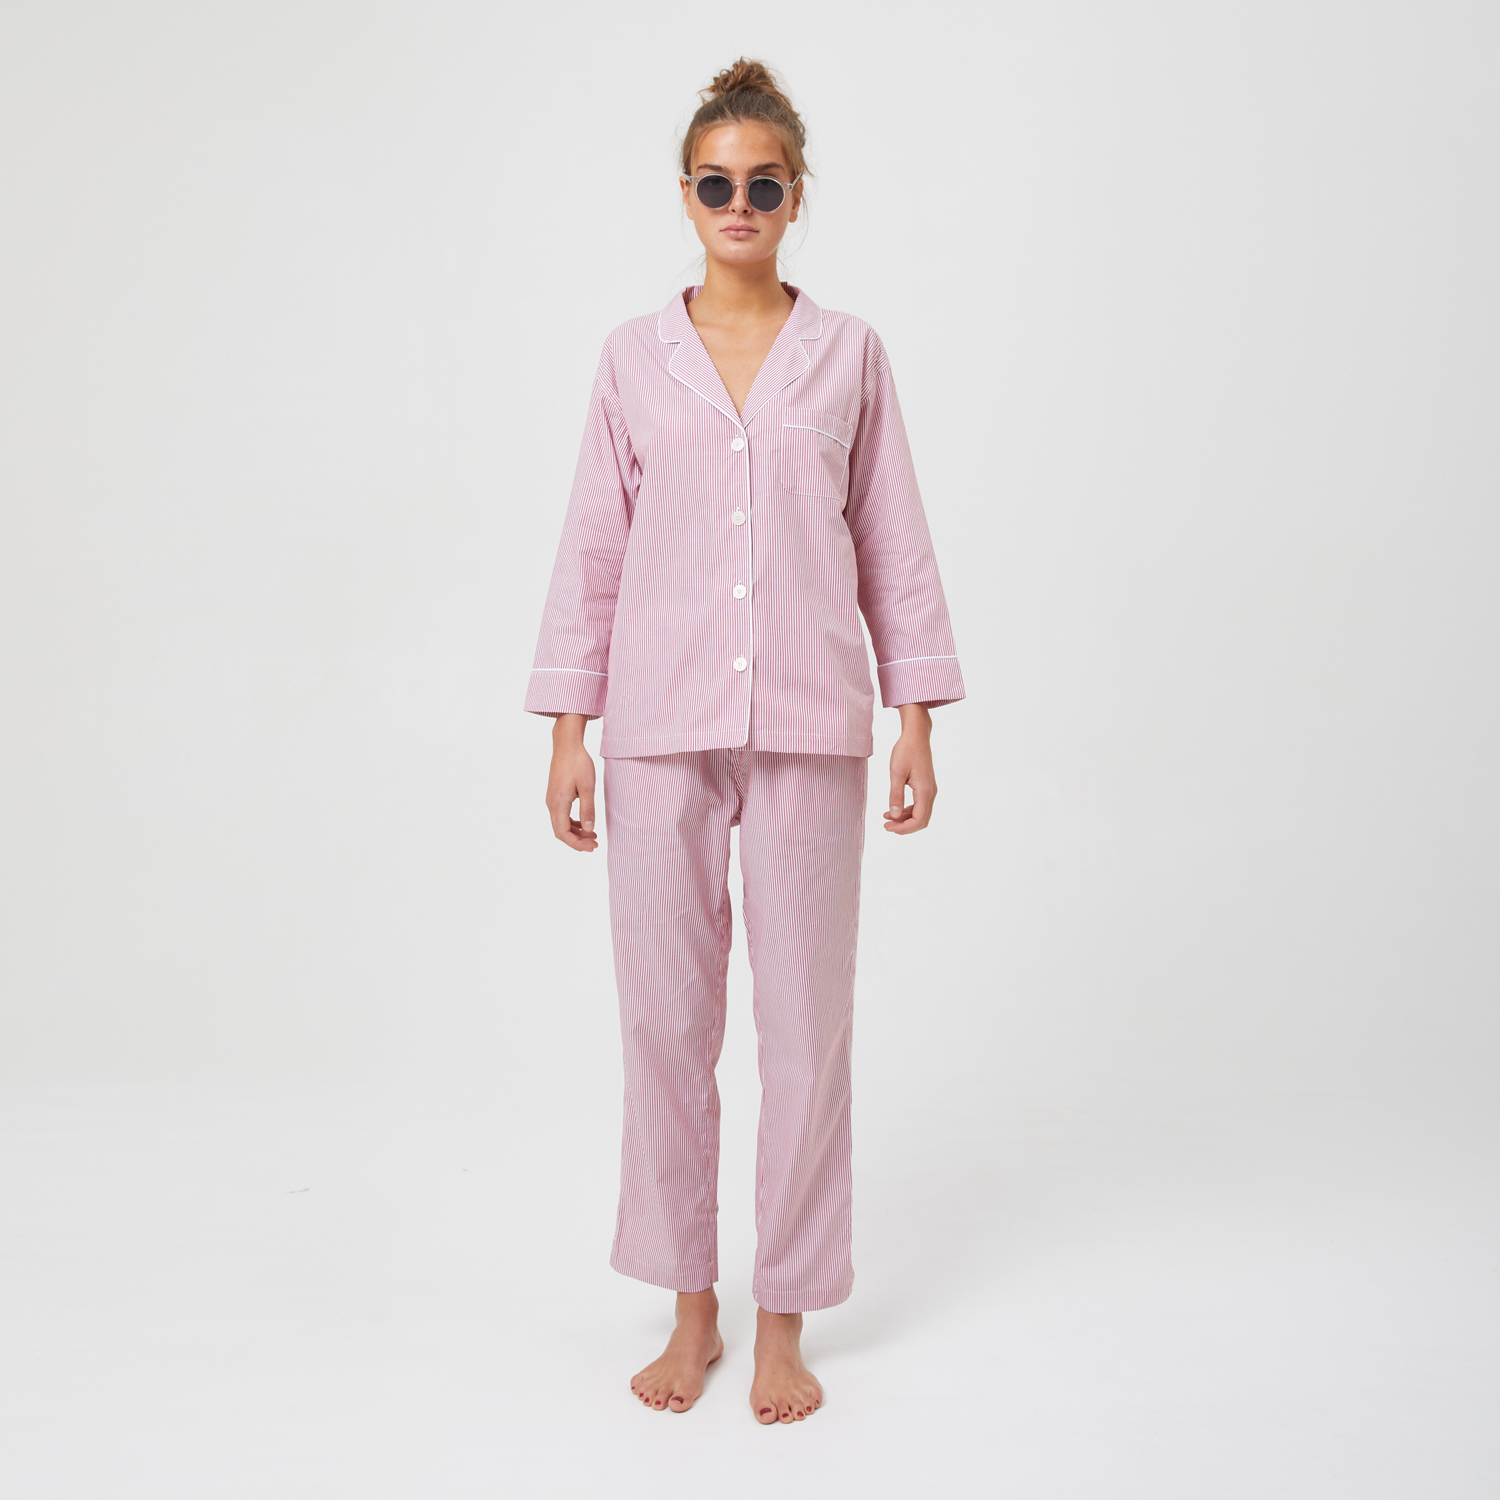 Pyjamas Nufferton | Stripe - Loungewear Loungewear Eve | Official Thin Red & White Unisex – Nufferton Womans Pyjama site -